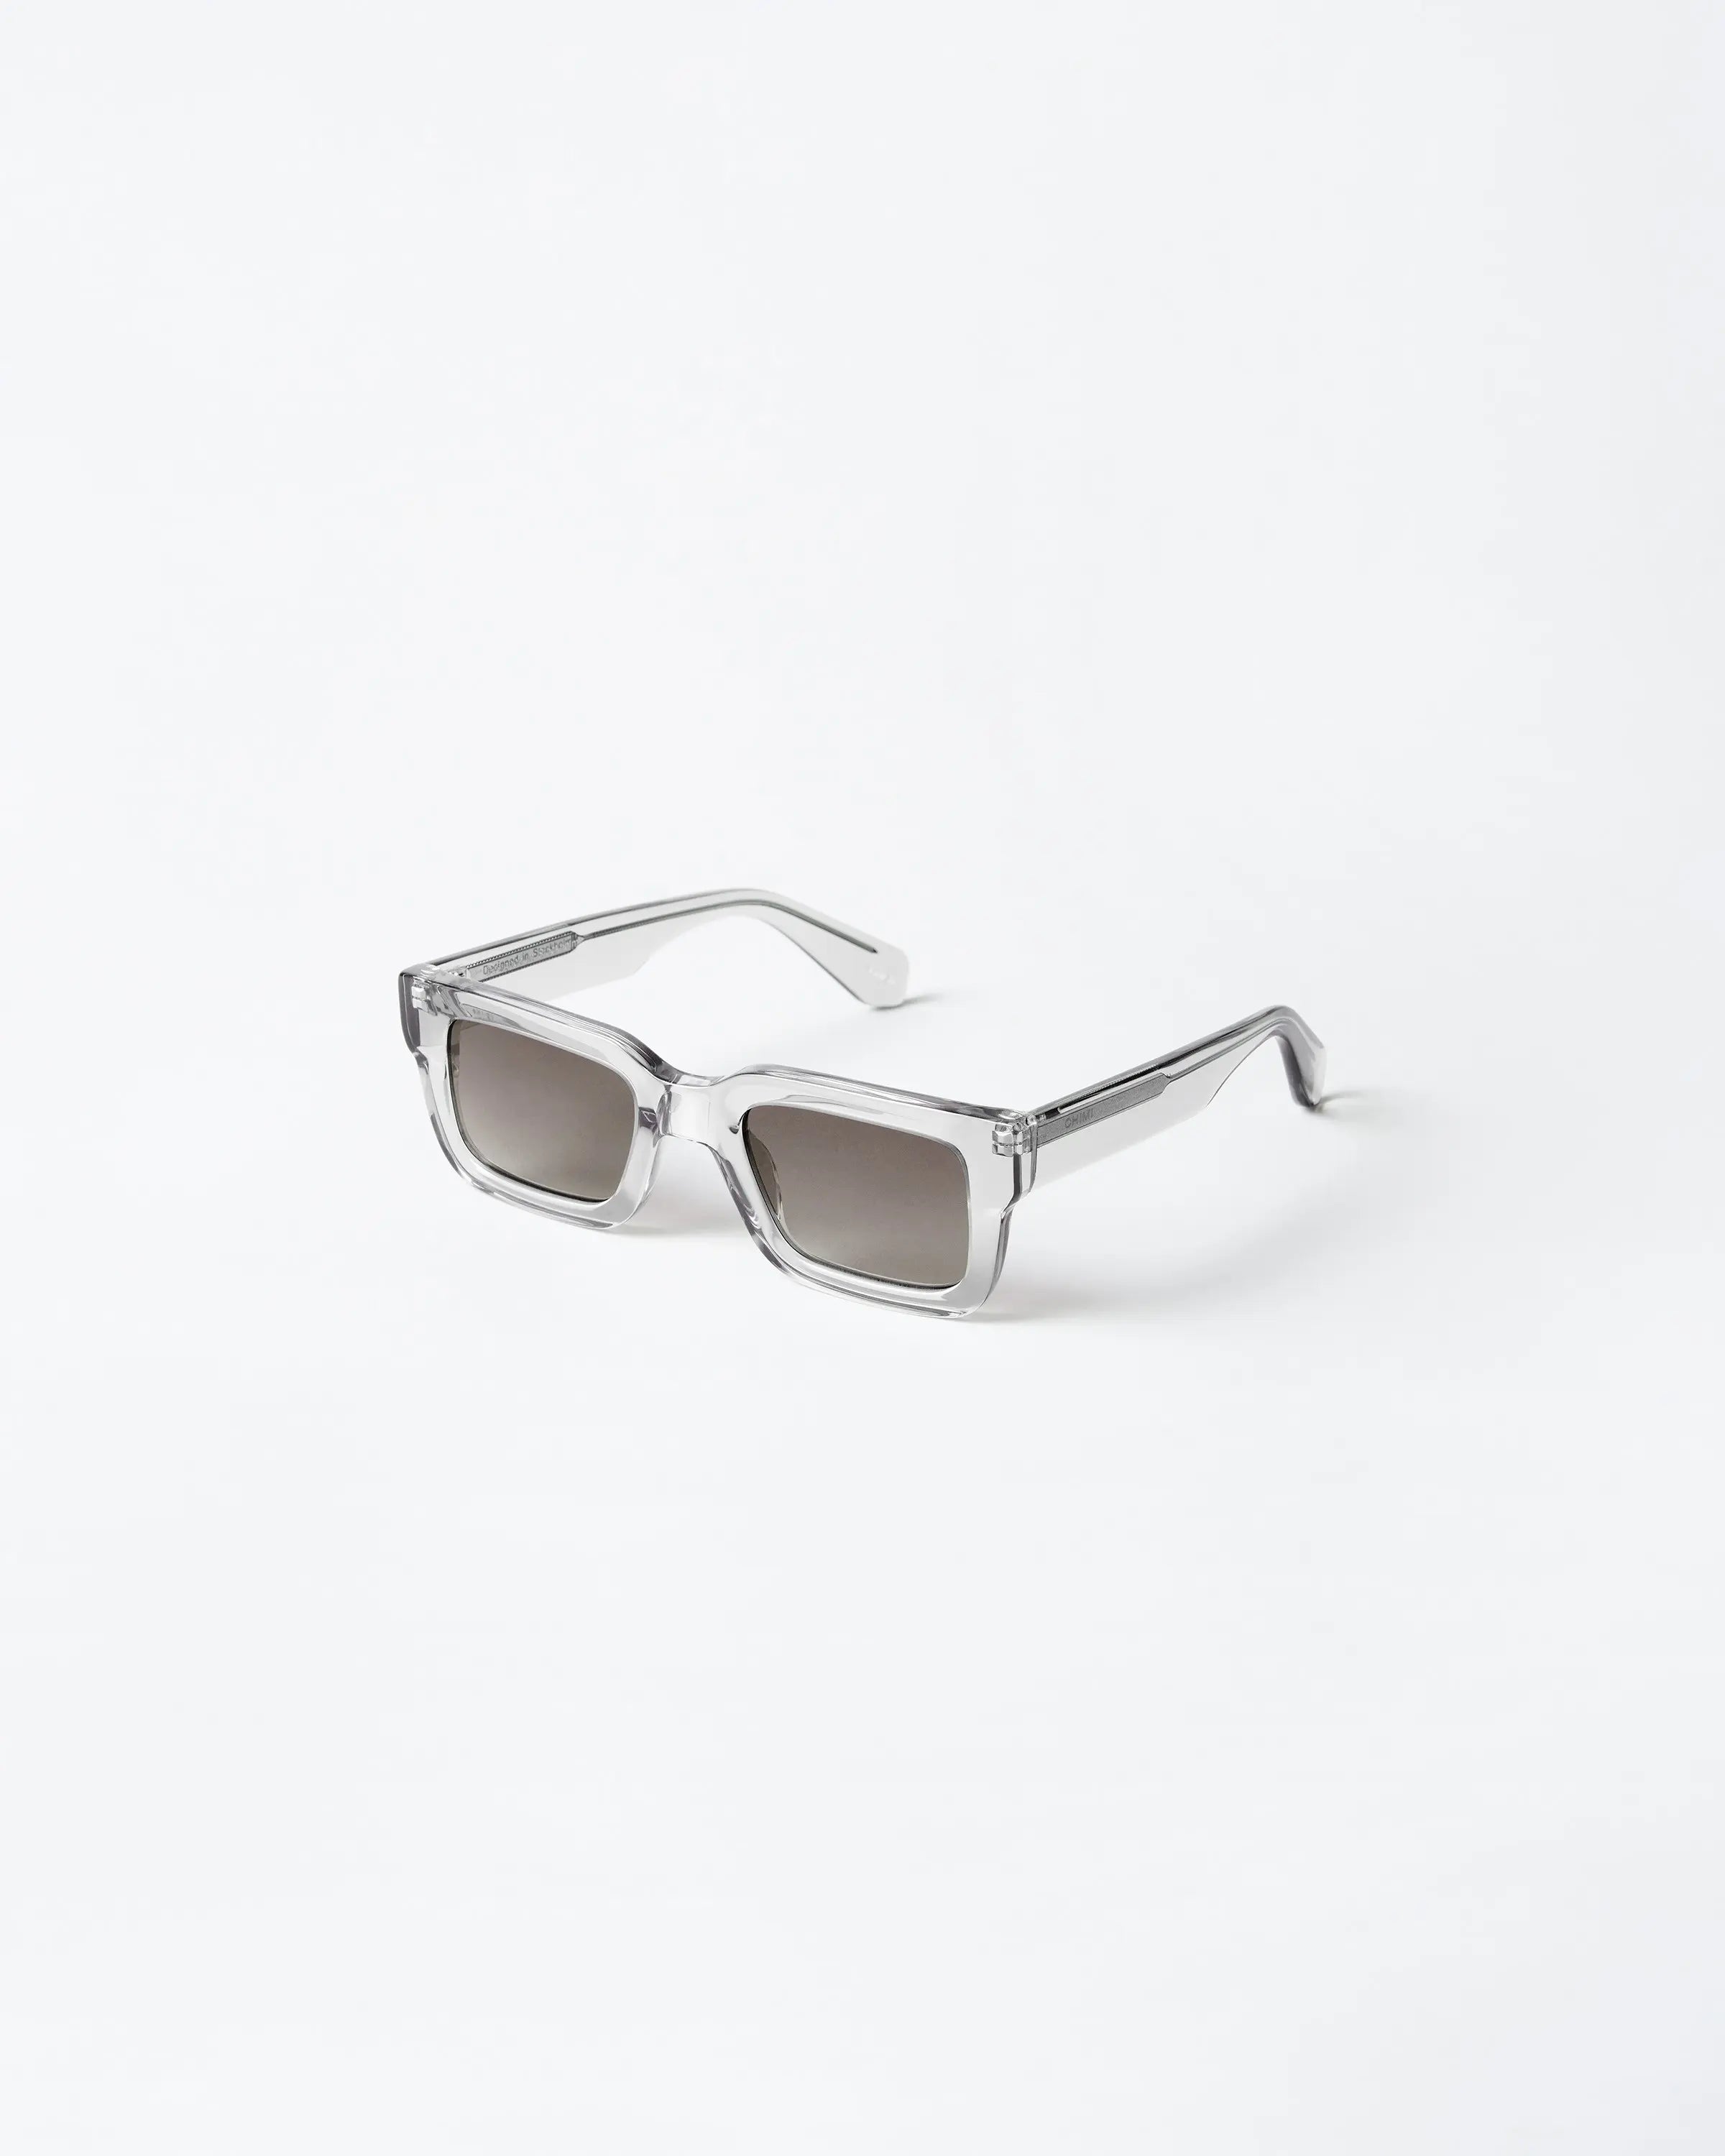 CHIMI 05 Sunglasses